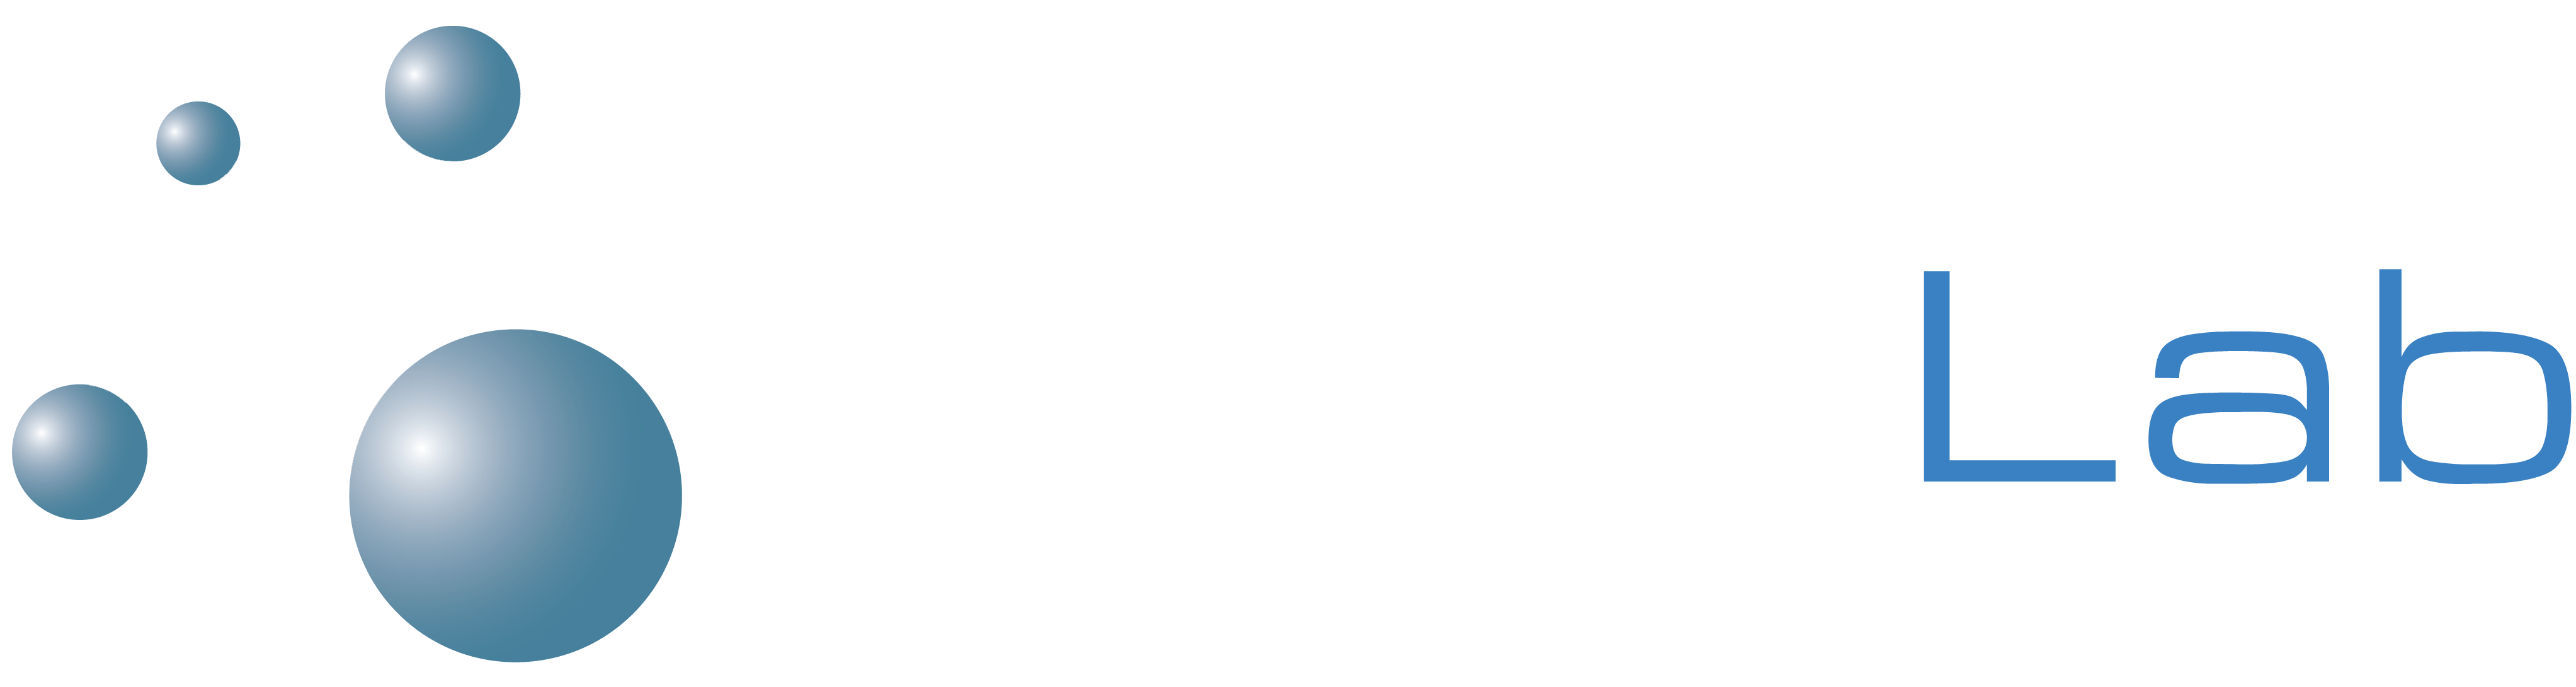 Smallab Logo